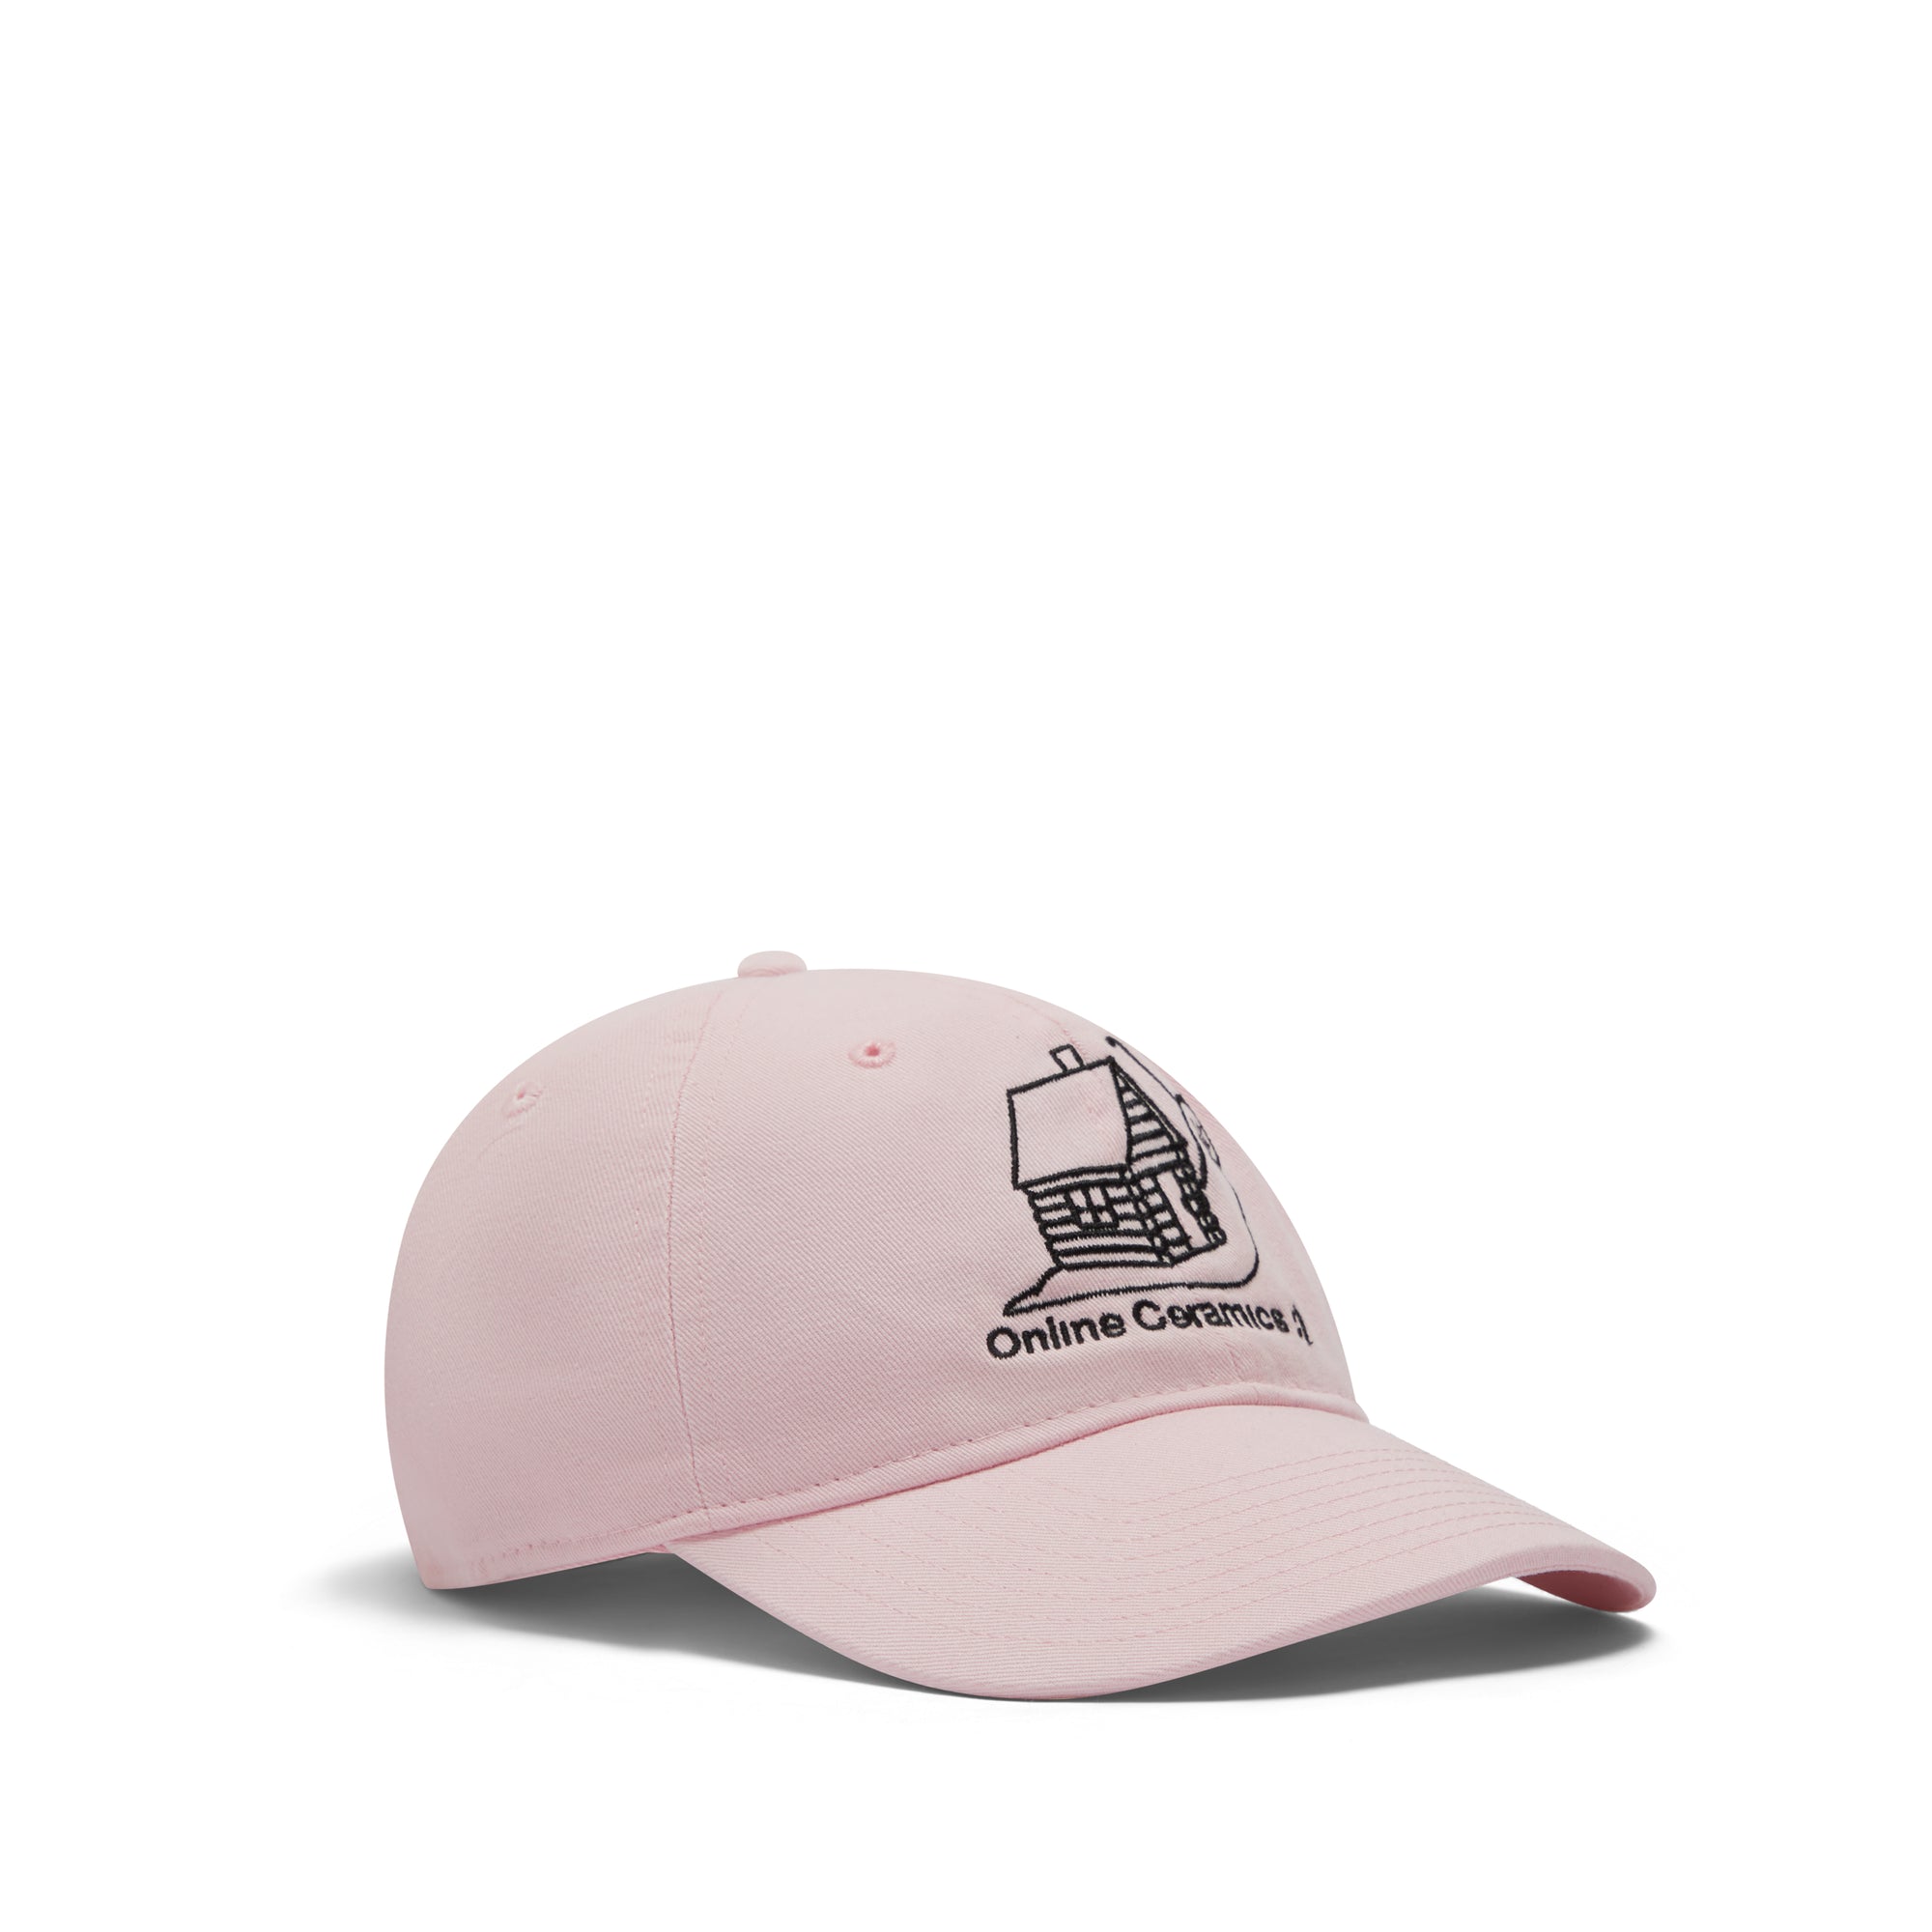 Online Ceramics - Cabin Logo Hat - (Pink) view 2